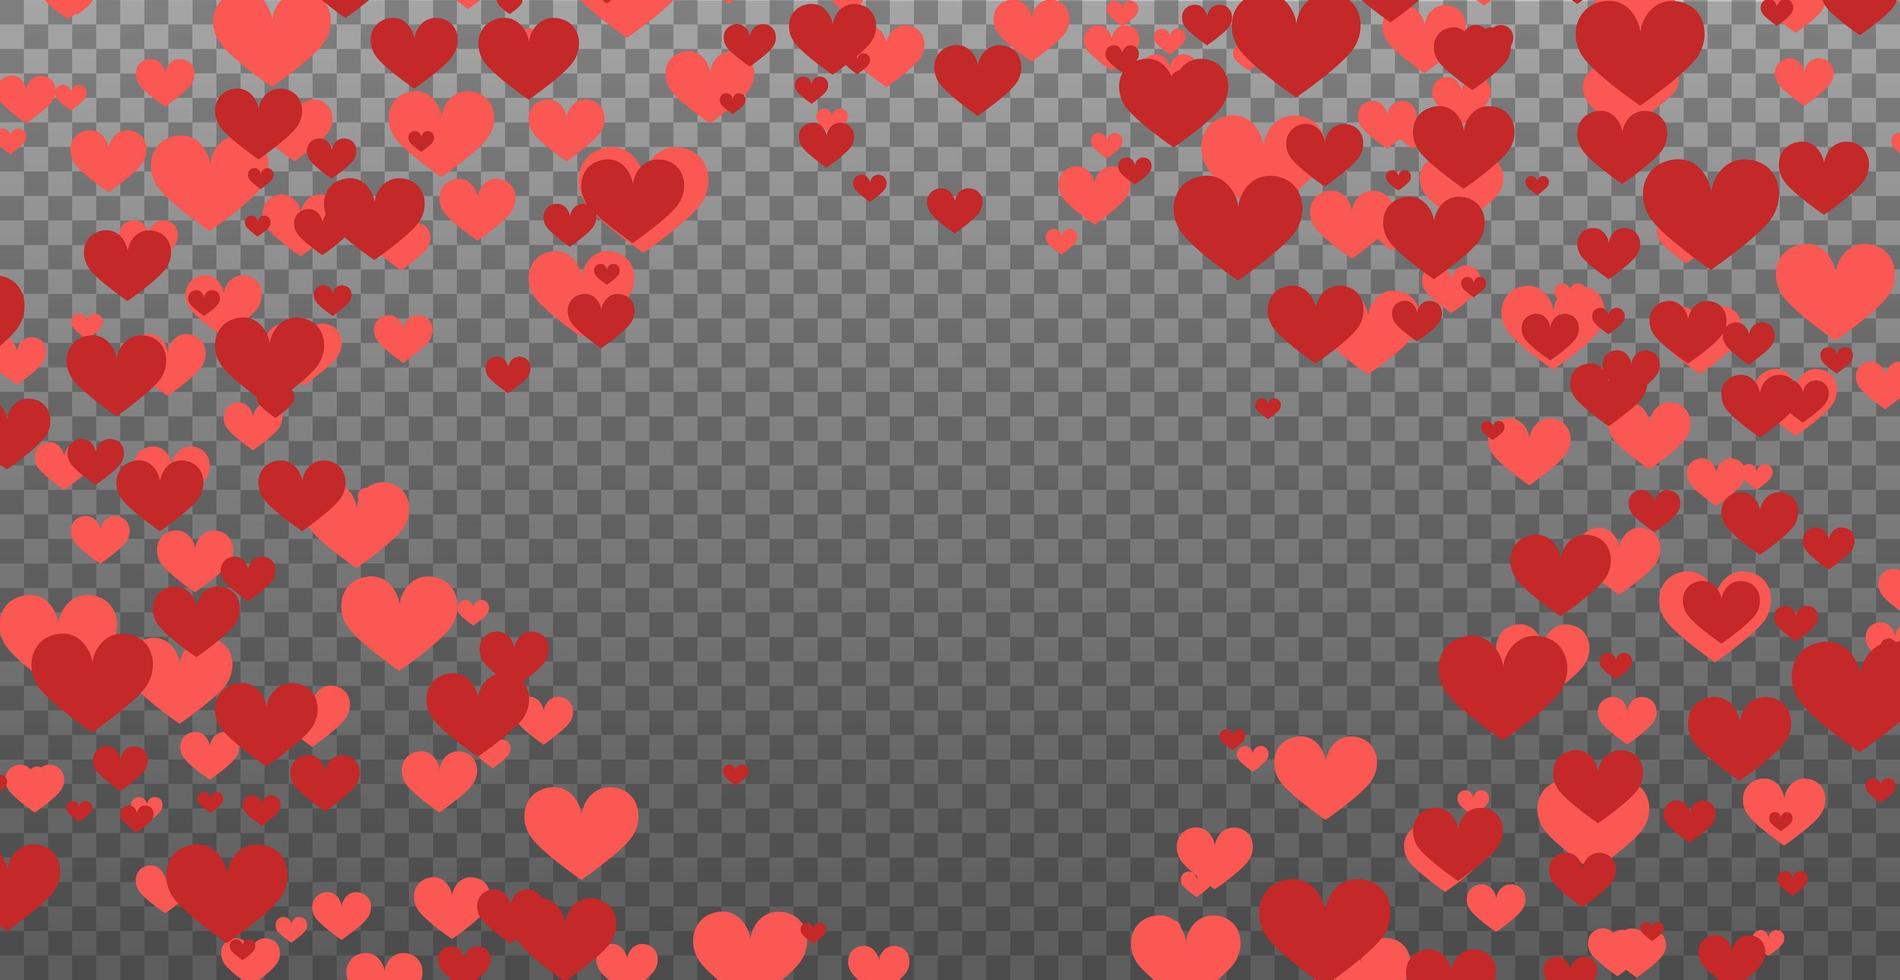 rode harten op transparante achtergrond websjabloon vector